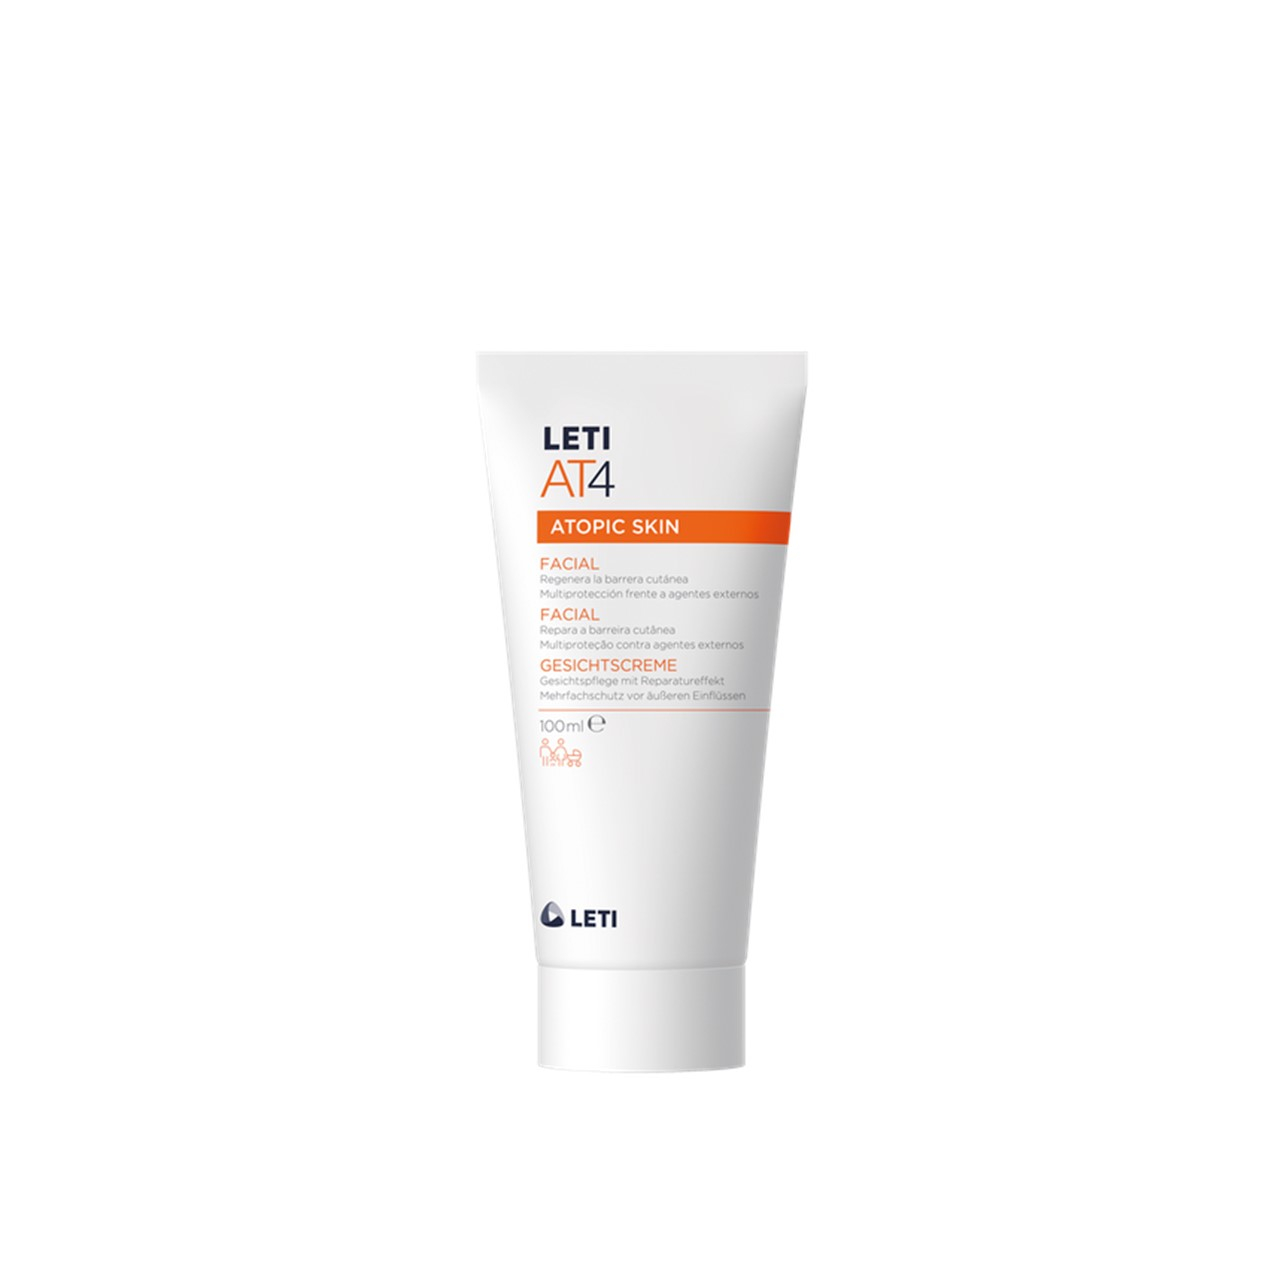 LETI AT4 Atopic Skin Facial Cream 100ml